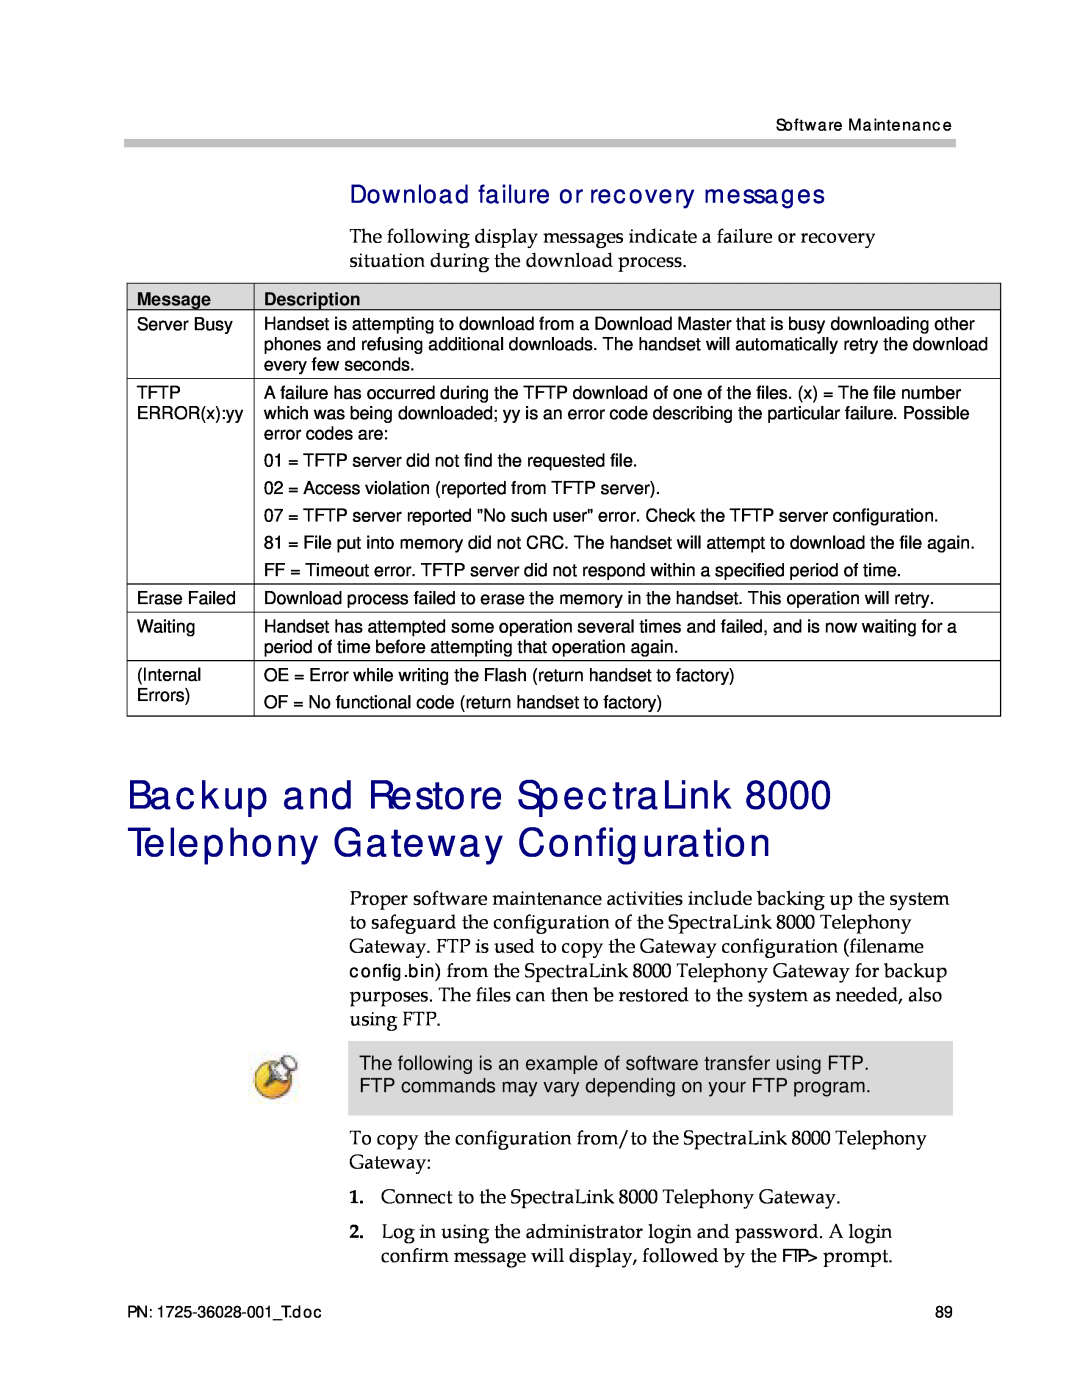 Polycom 1725-36028-001 manual Backup and Restore SpectraLink 8000 Telephony Gateway Configuration 